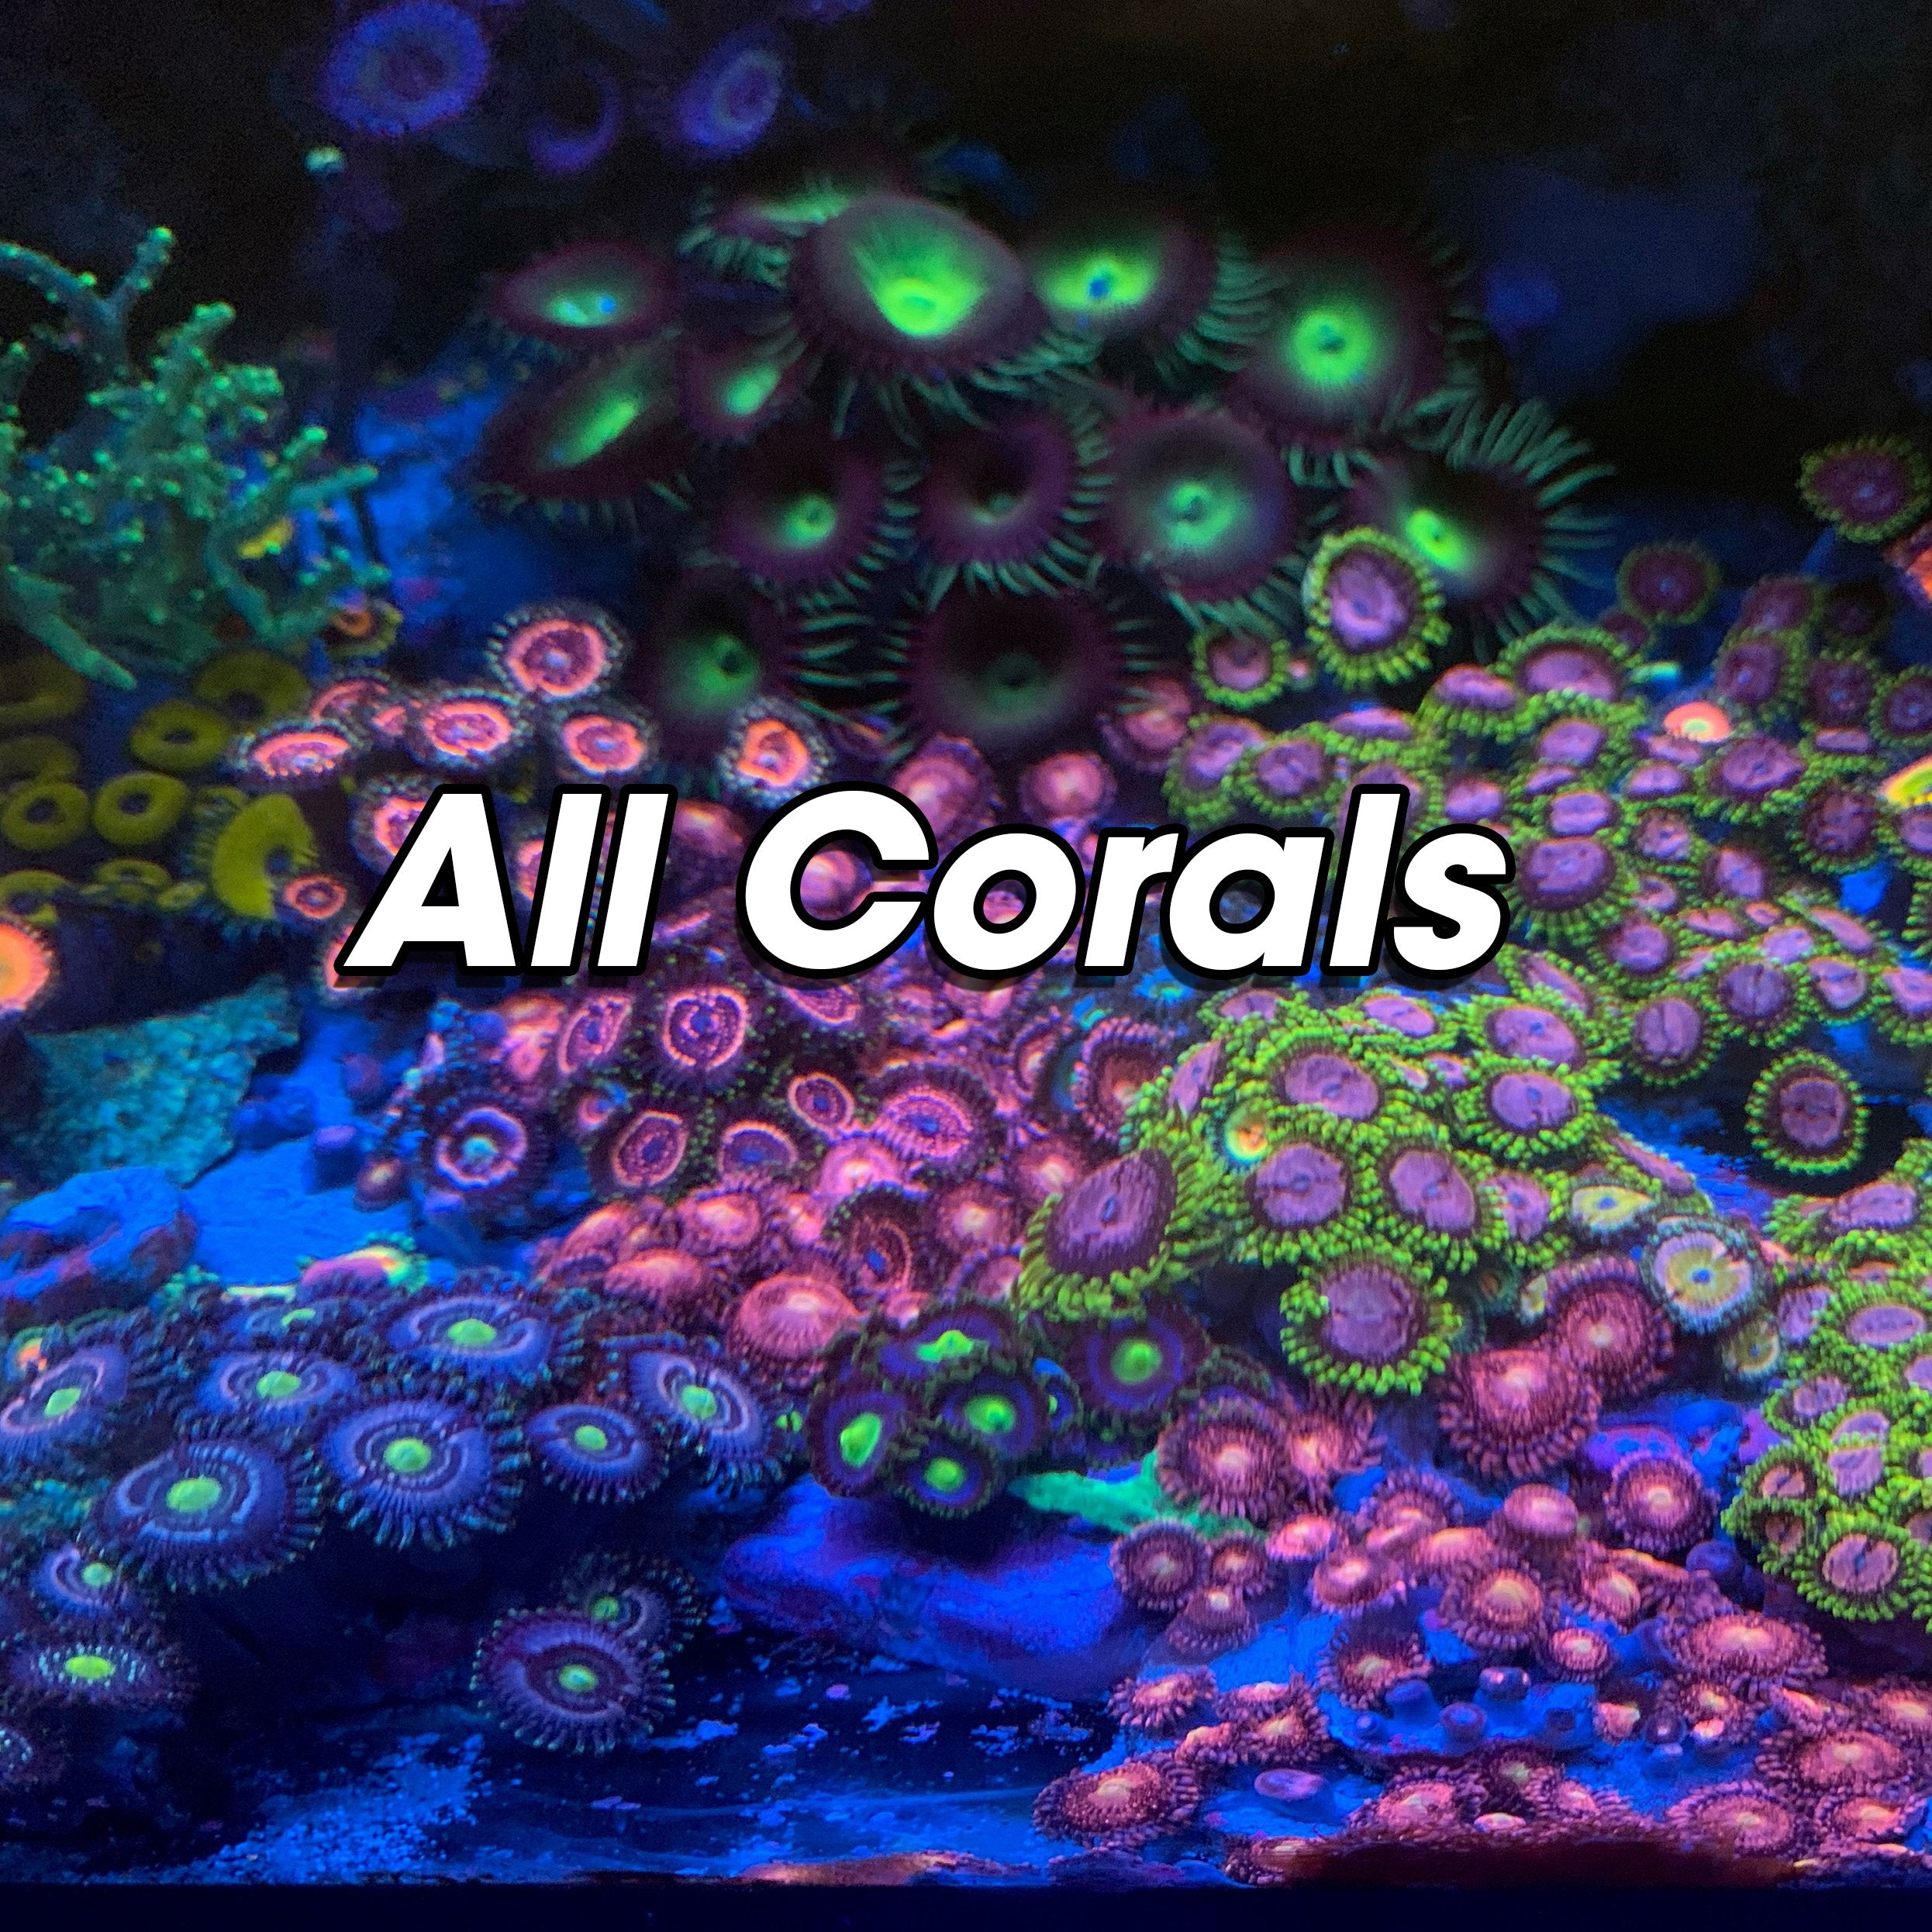 All Corals